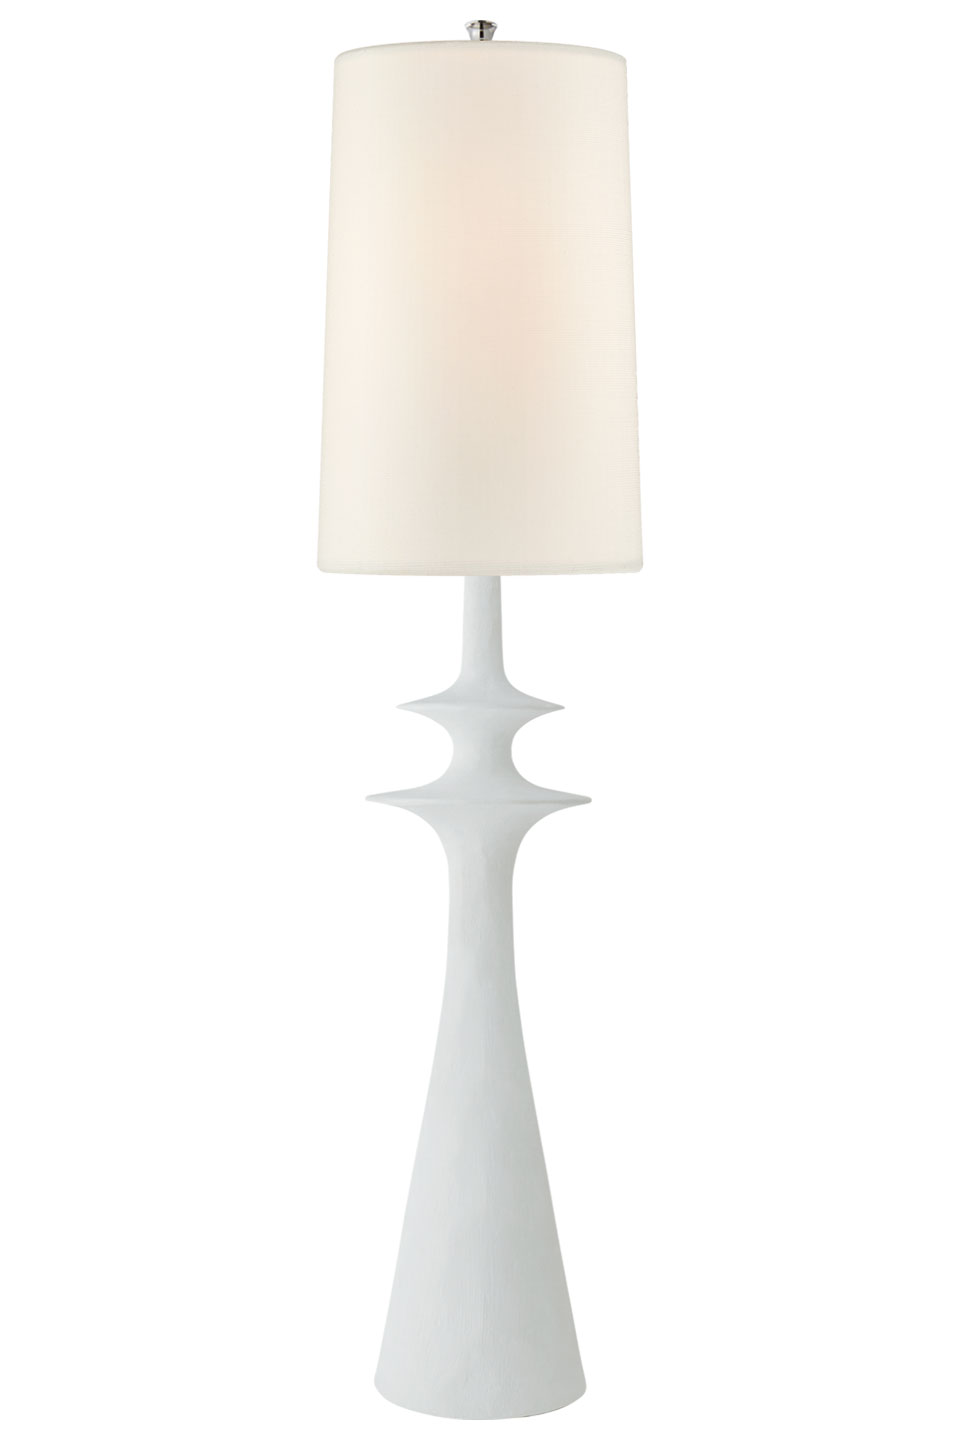 Sculpture floor lamp in white plaster Lakmos. Visual Comfort&Co.. 